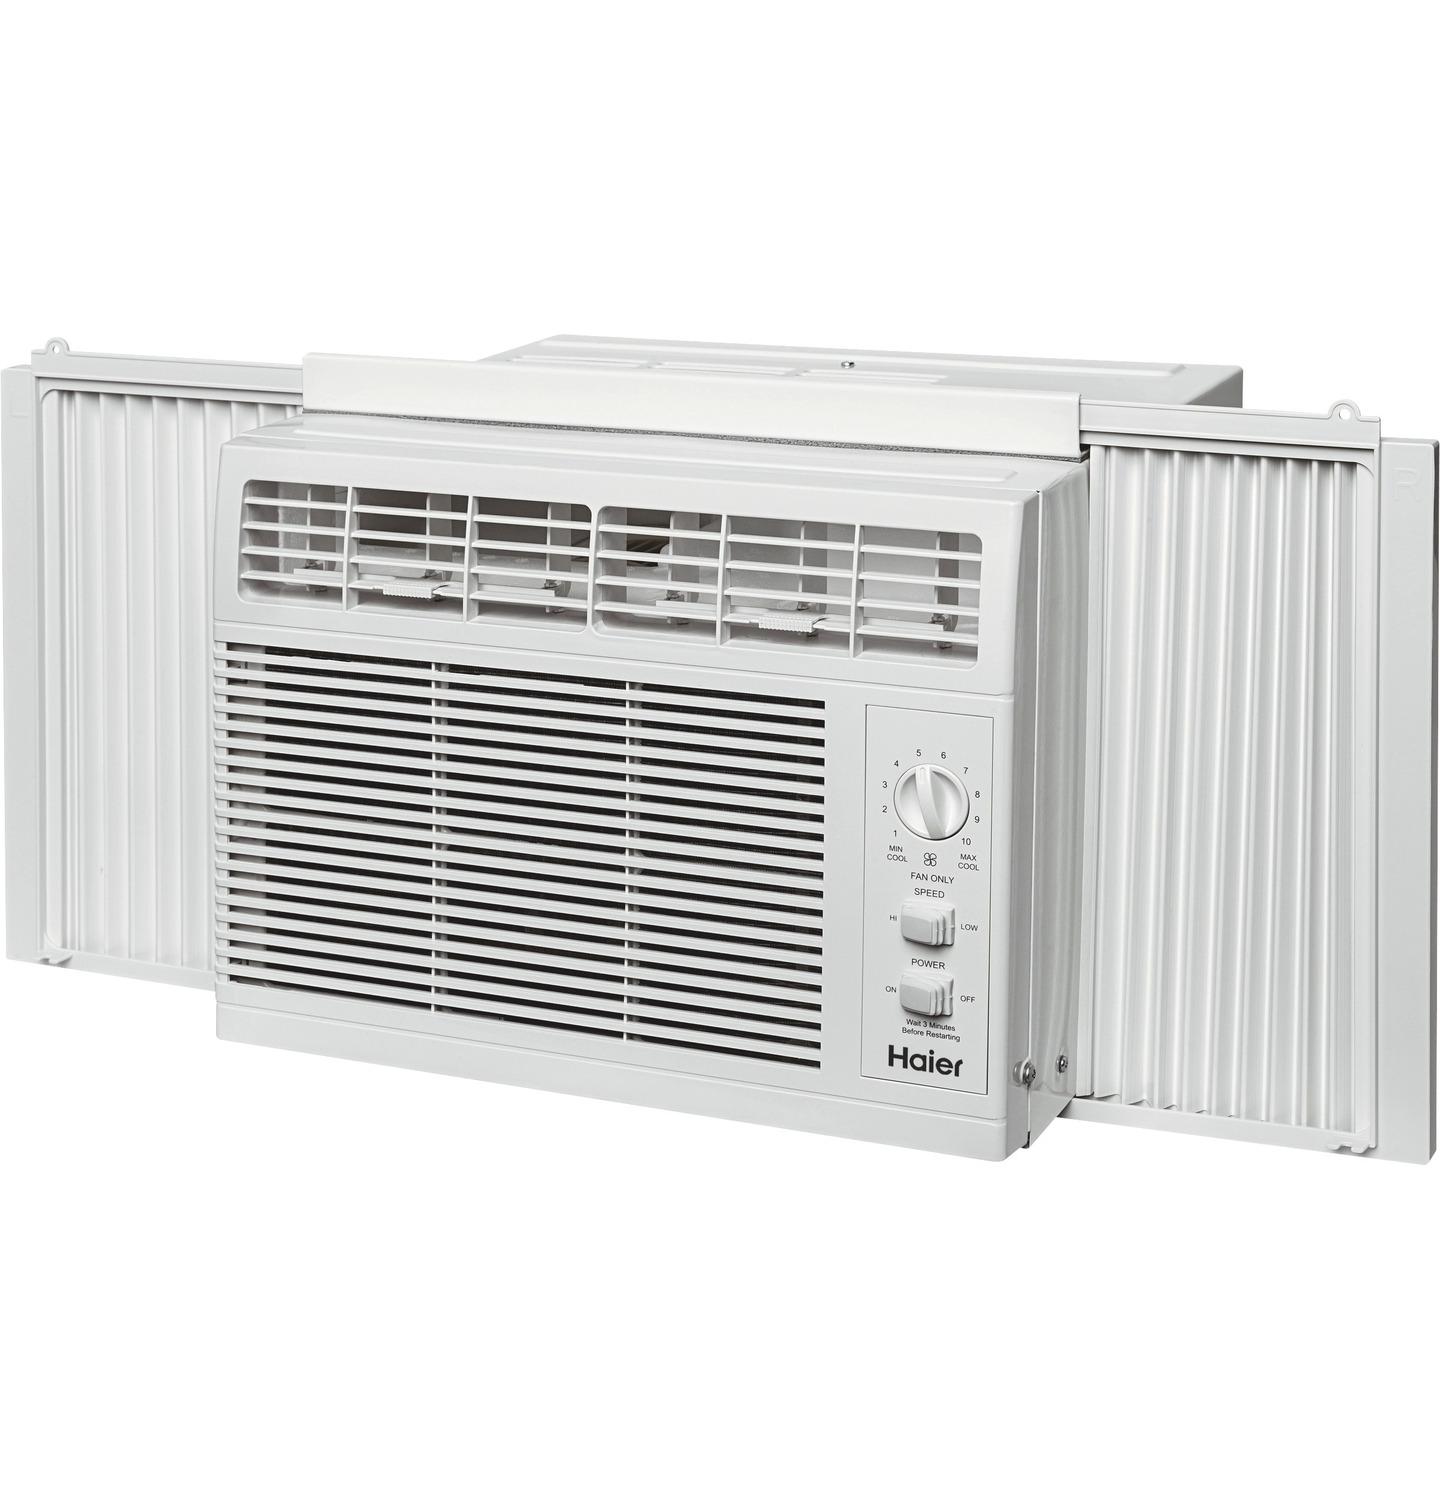 Haier 115 Volt Room Air Conditioner